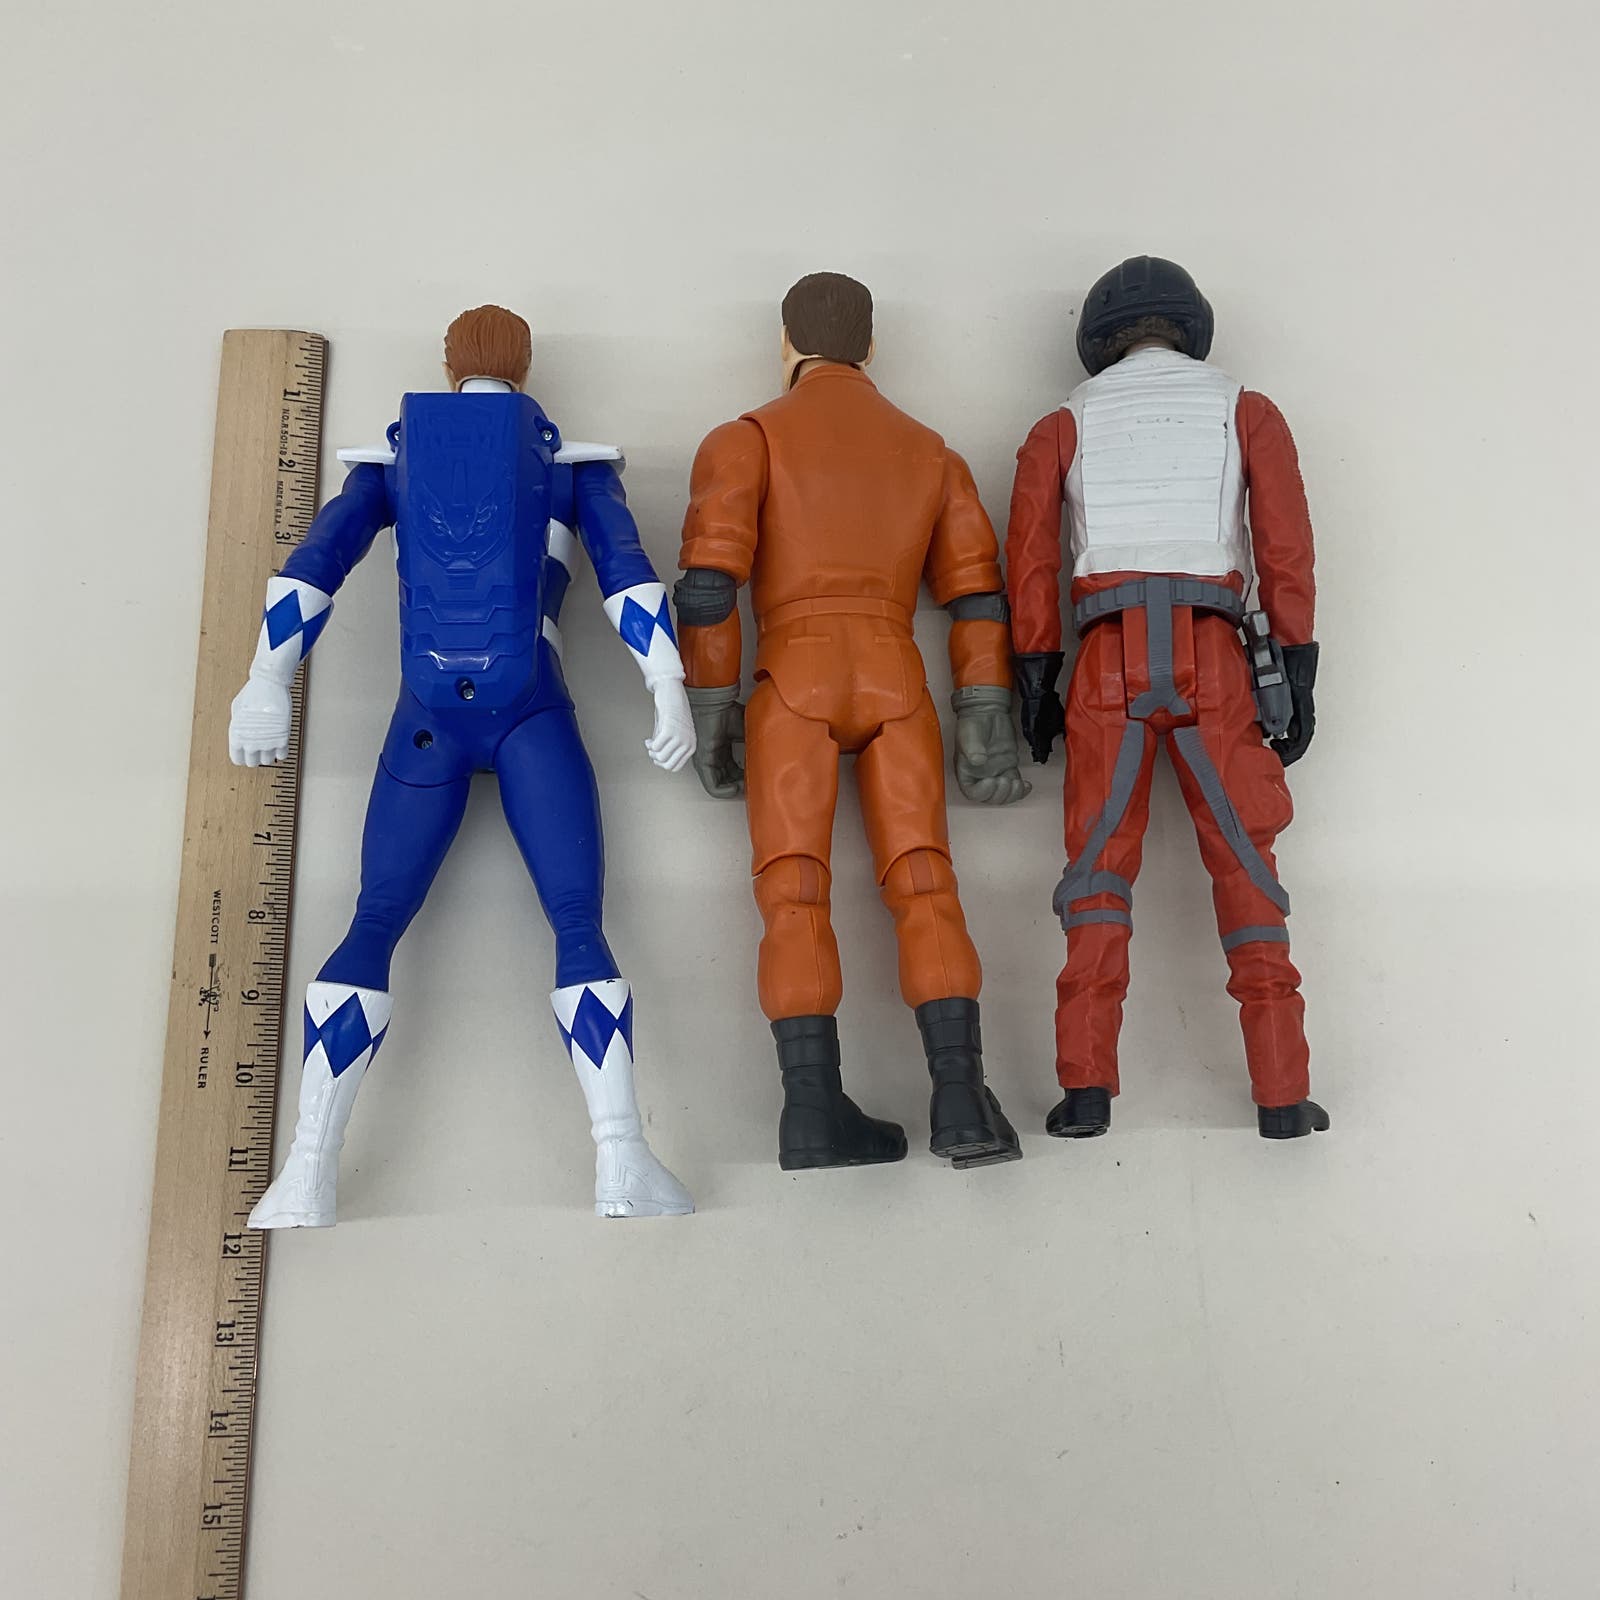 12" Action Figures Blue Power Ranger Buzz Lightyear Orange Suit Star Wars Pilot - Warehouse Toys